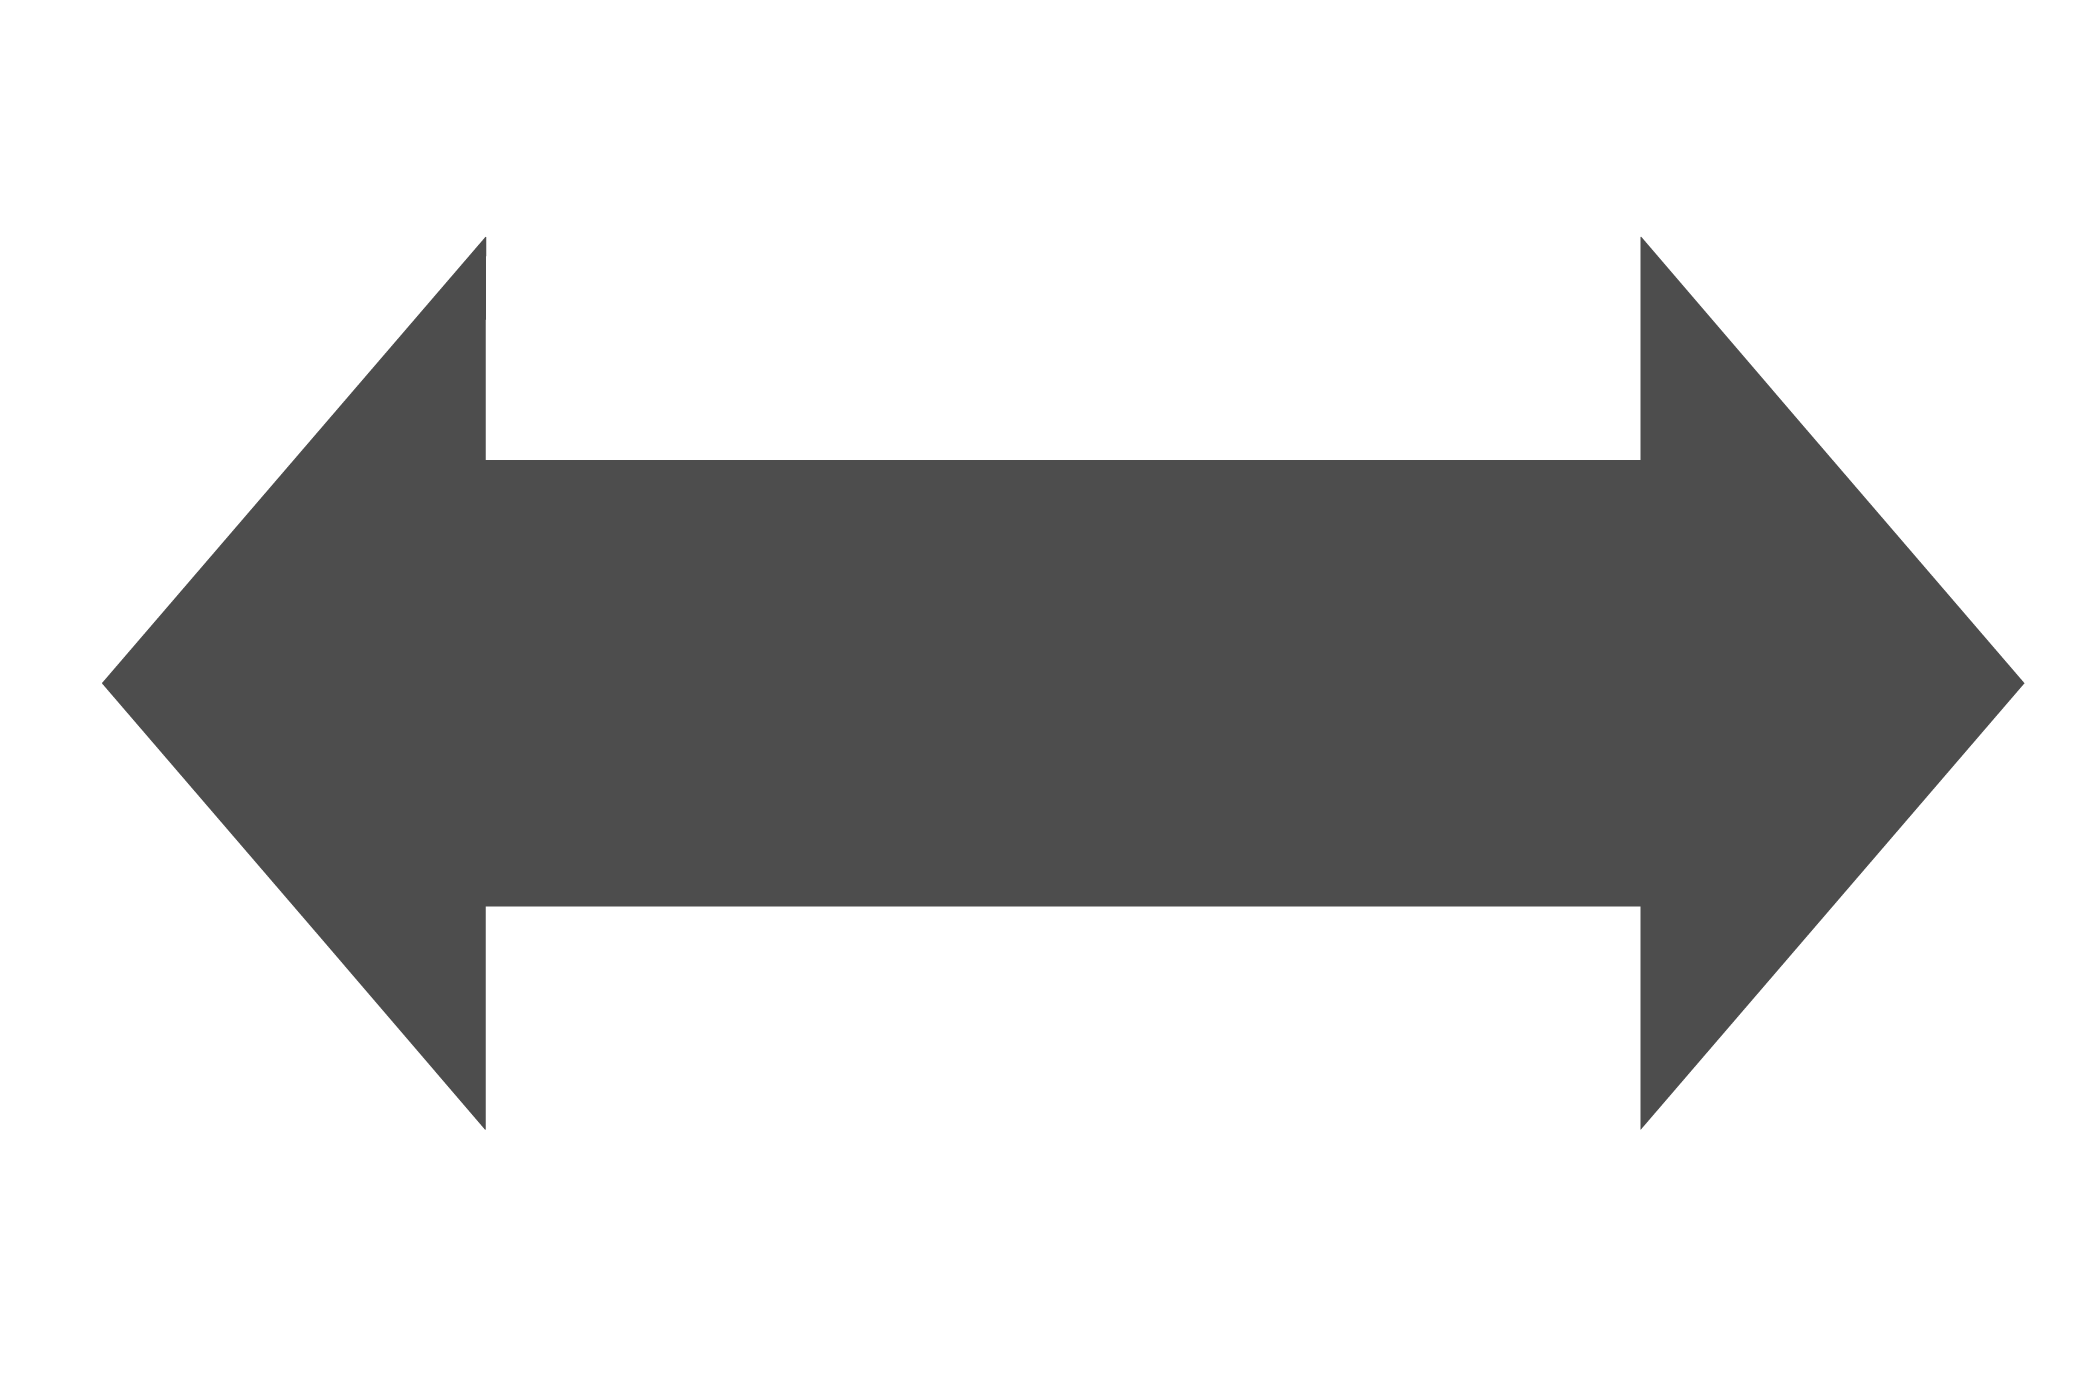 Cursor / Down / Symbol / Highlighter / Corner / Direction Arrow / Direction / Forward / Clip Art / Vector / Beju Curve / ai File / Edit